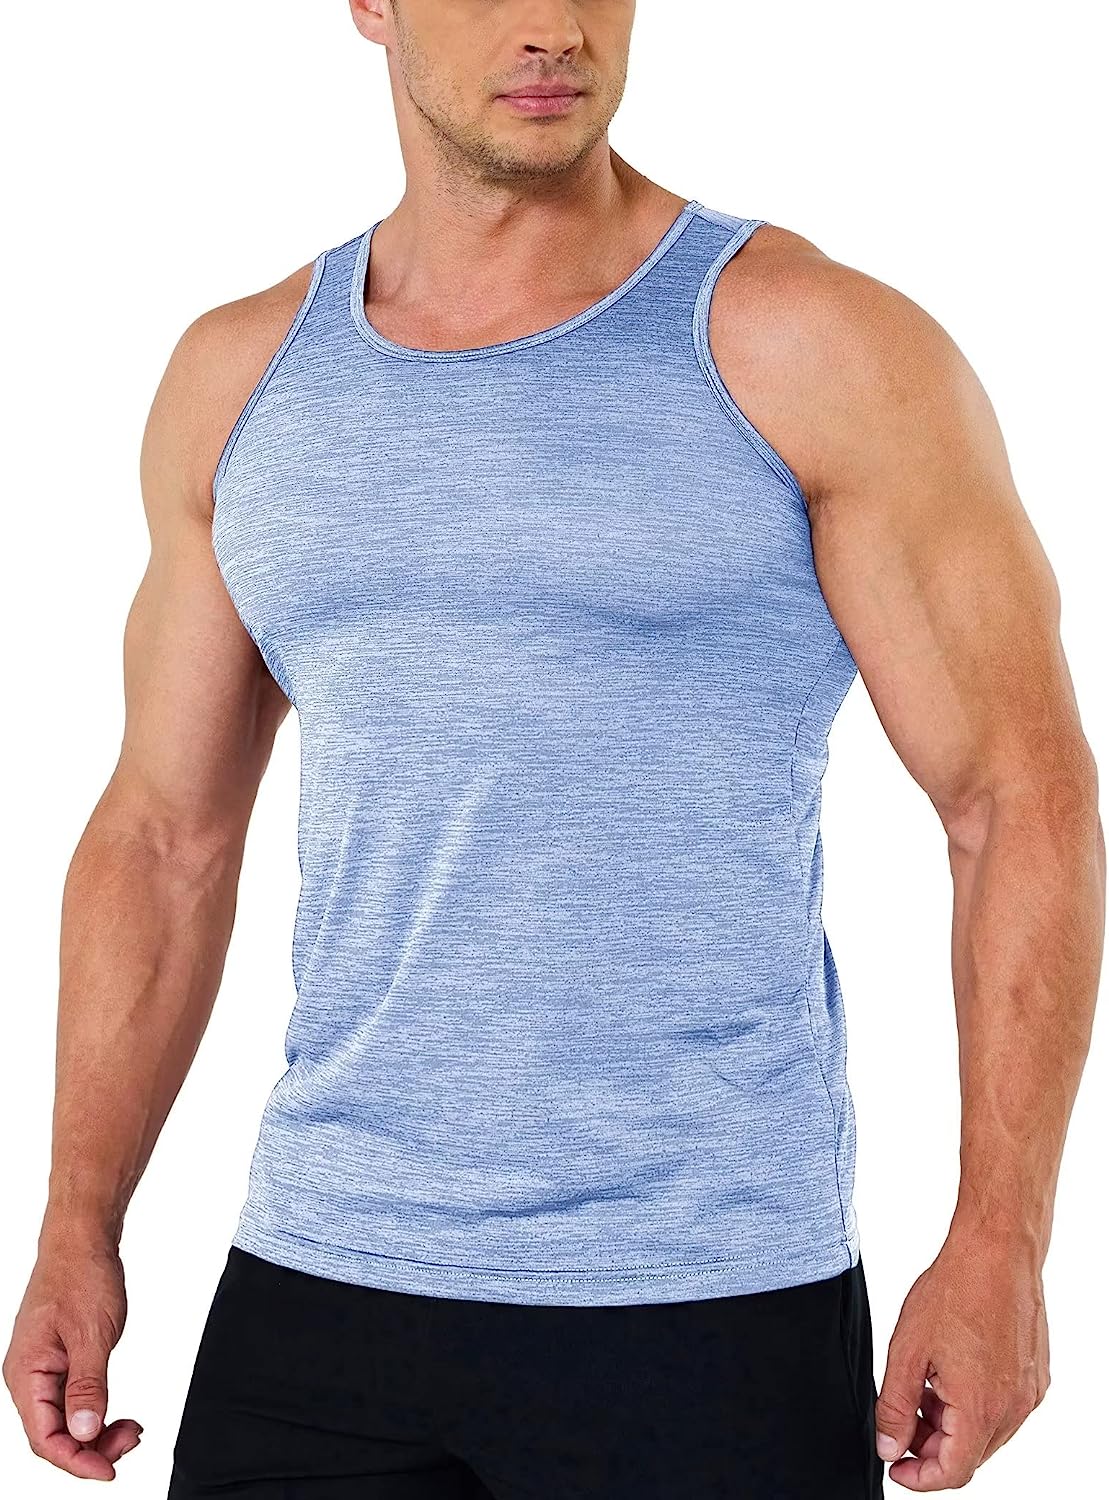  MAGCOMSEN Tank Tops for Men Workout Shirts for Men